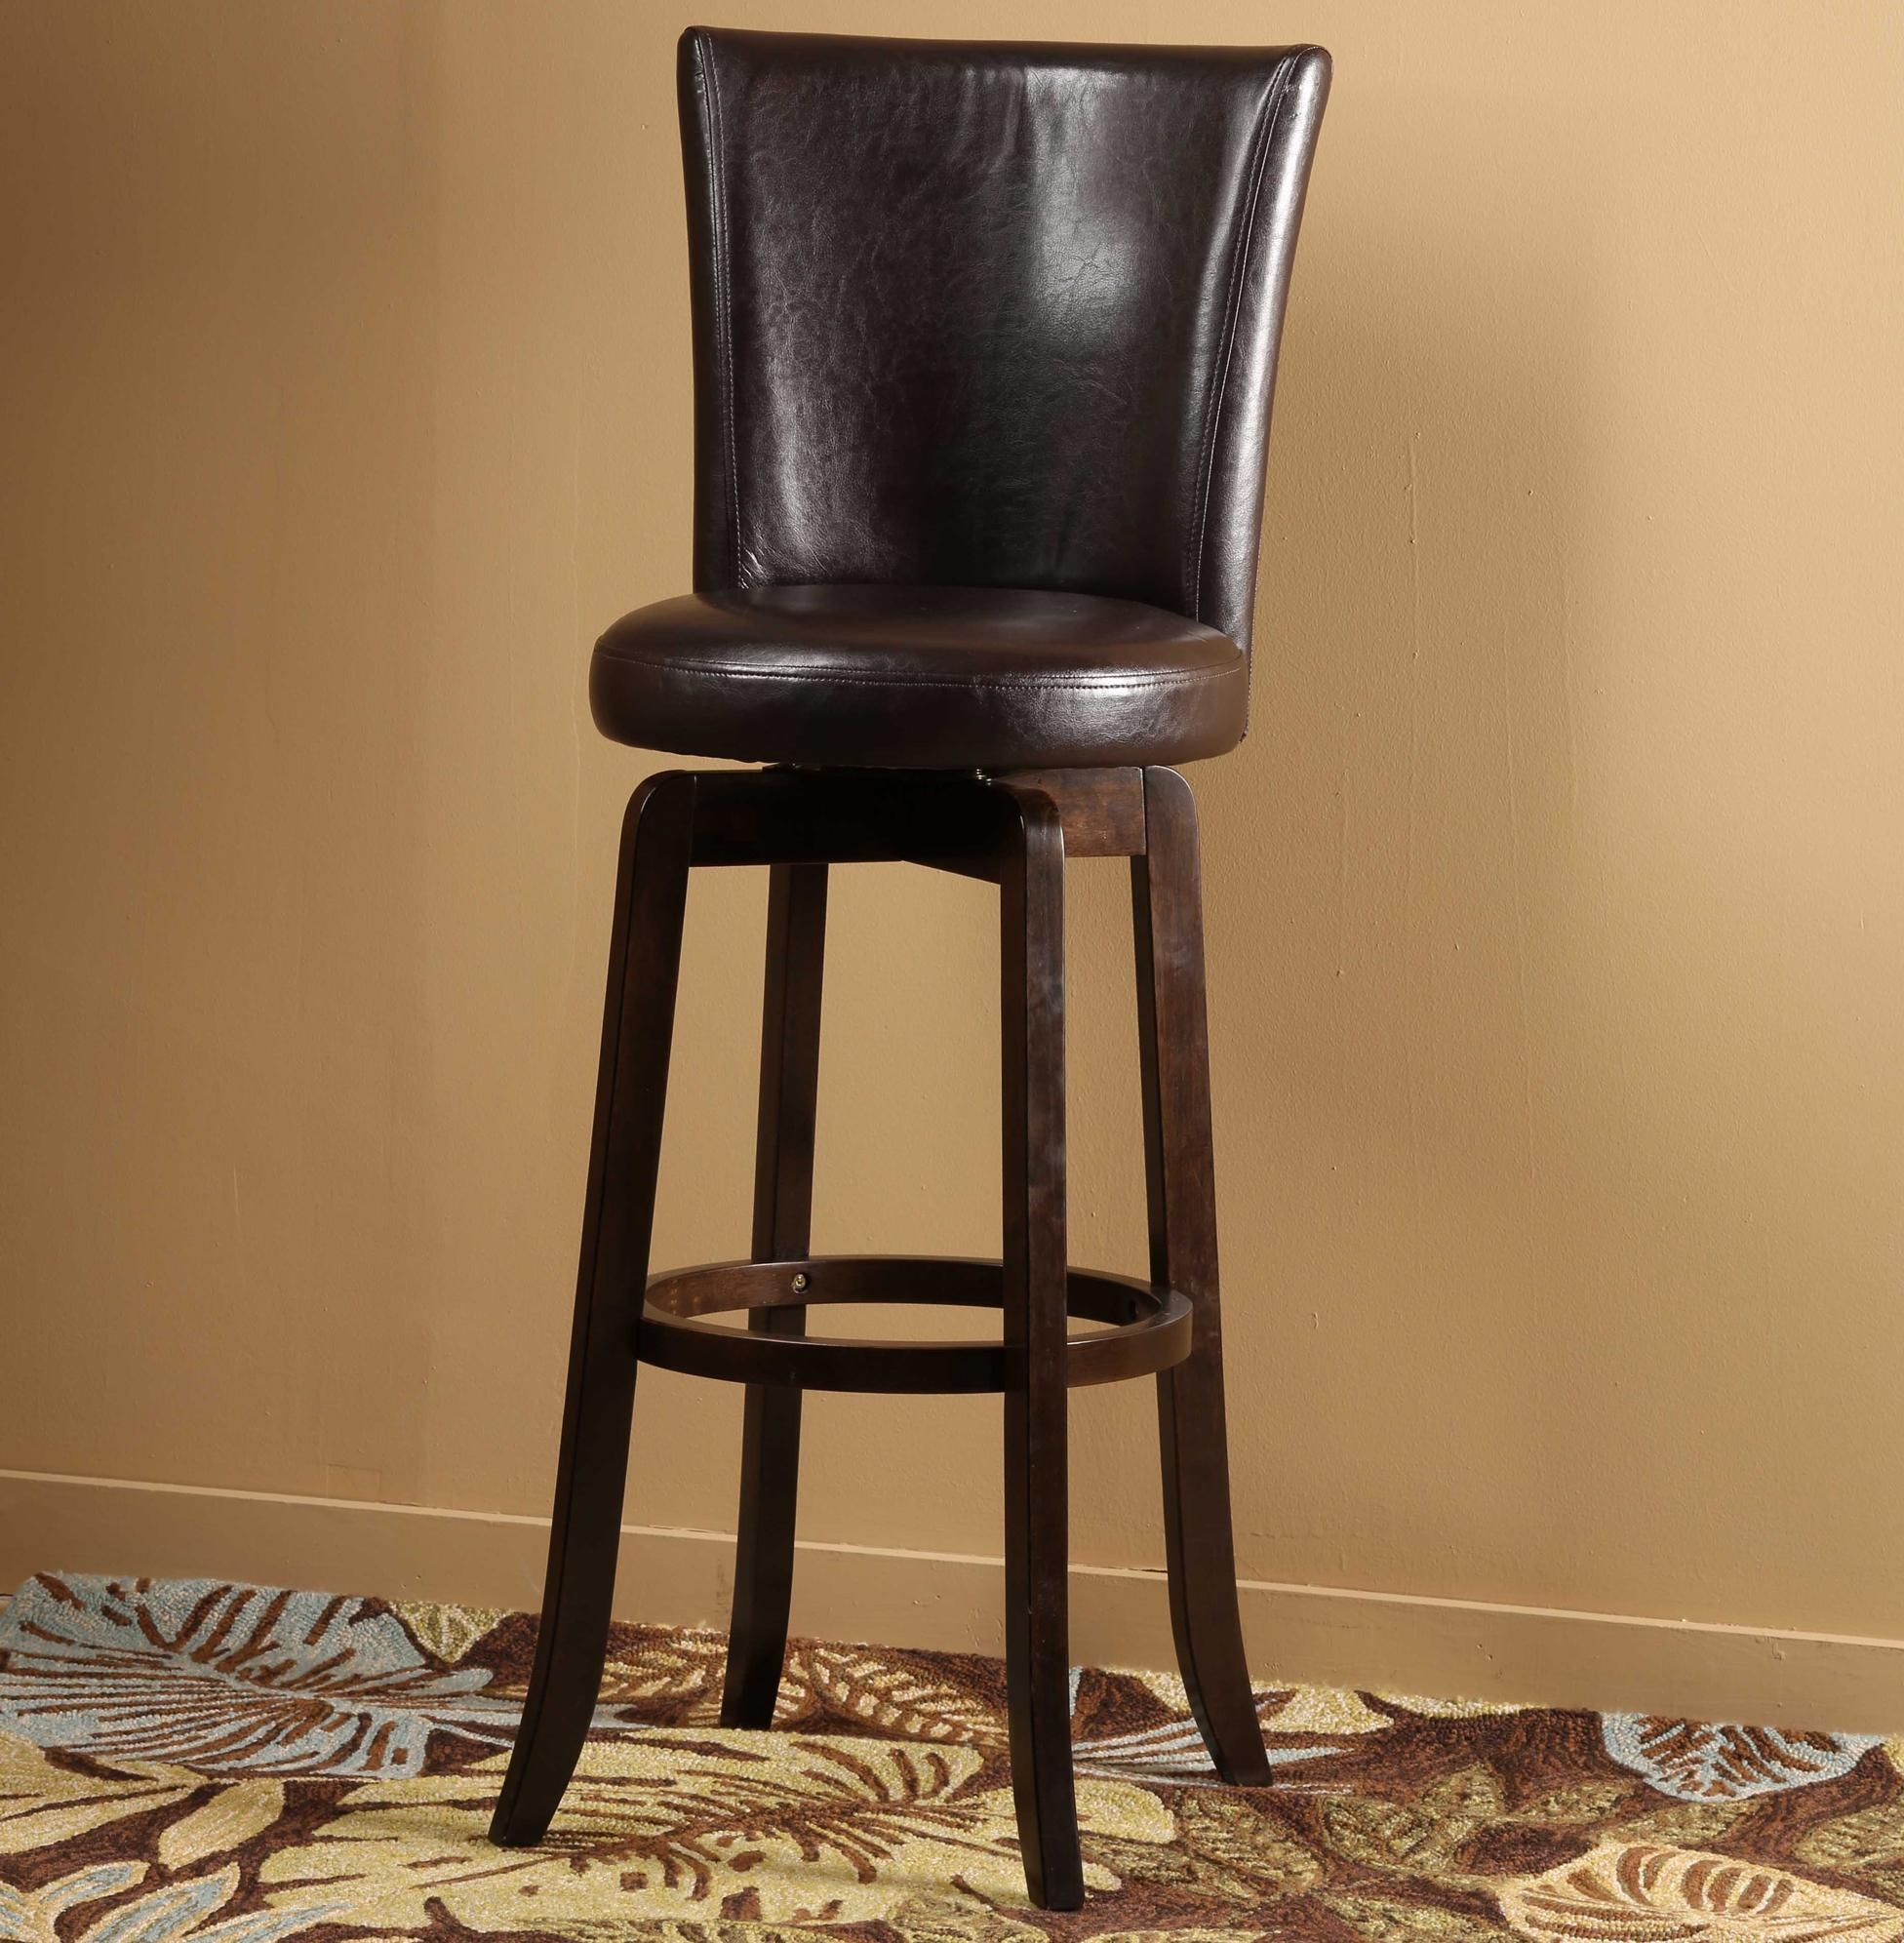 Copenhagen swivel stool this stylish swivel stool features solid construction